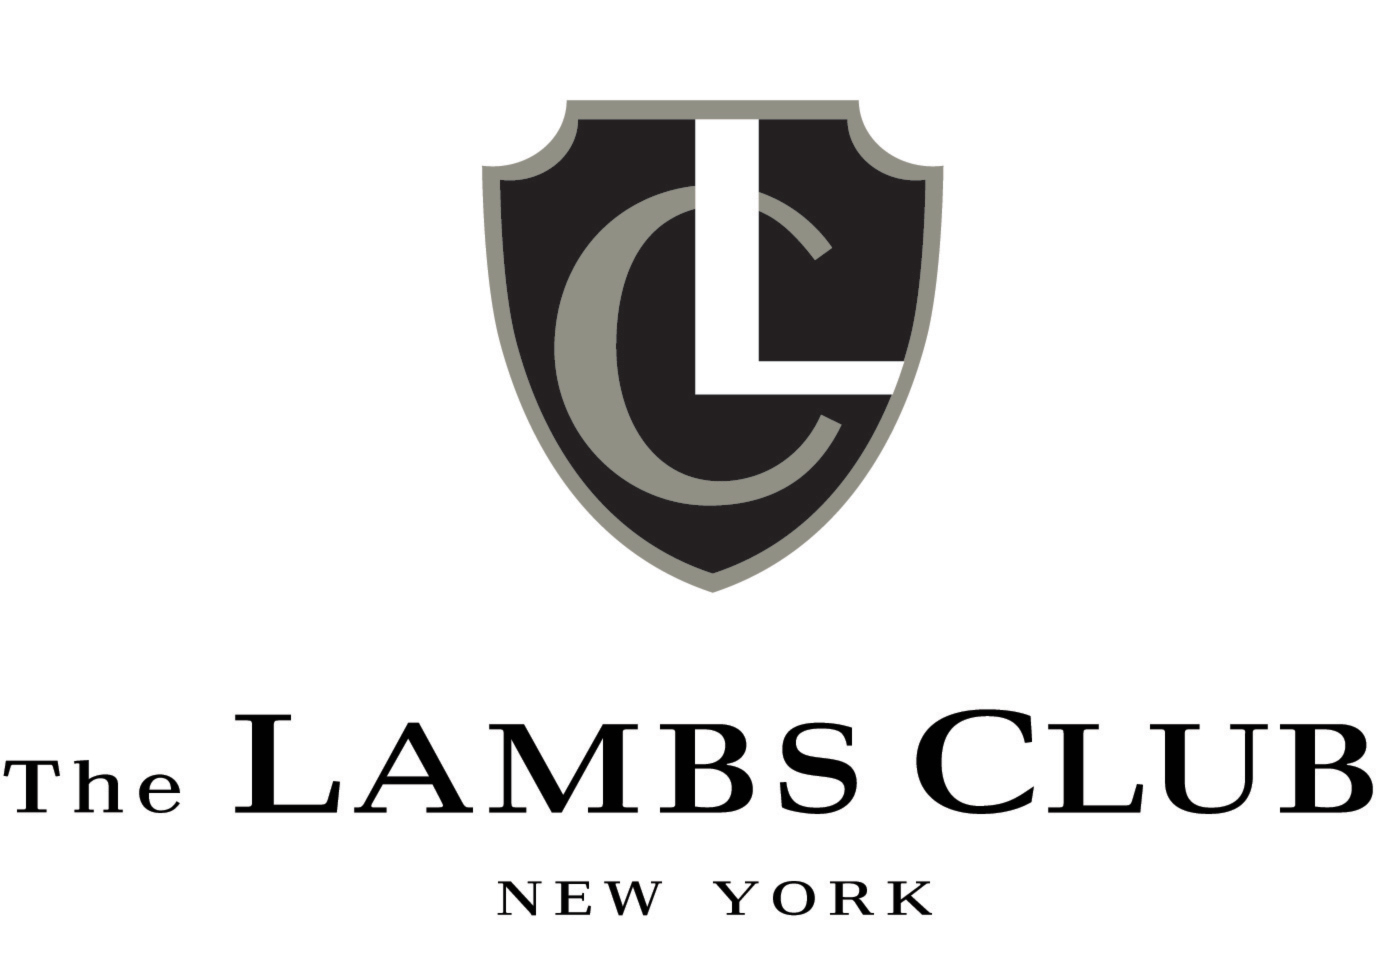 The Lamb's Club